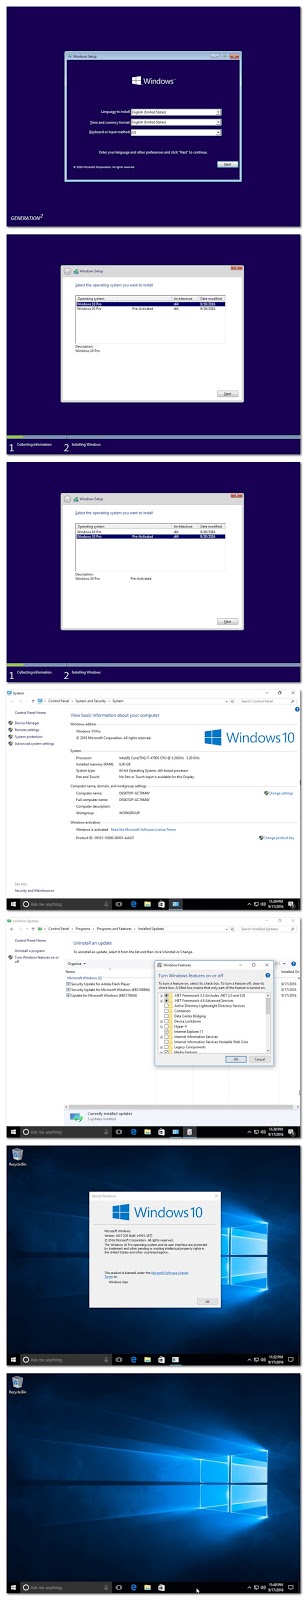 Windows 10 iso tpb